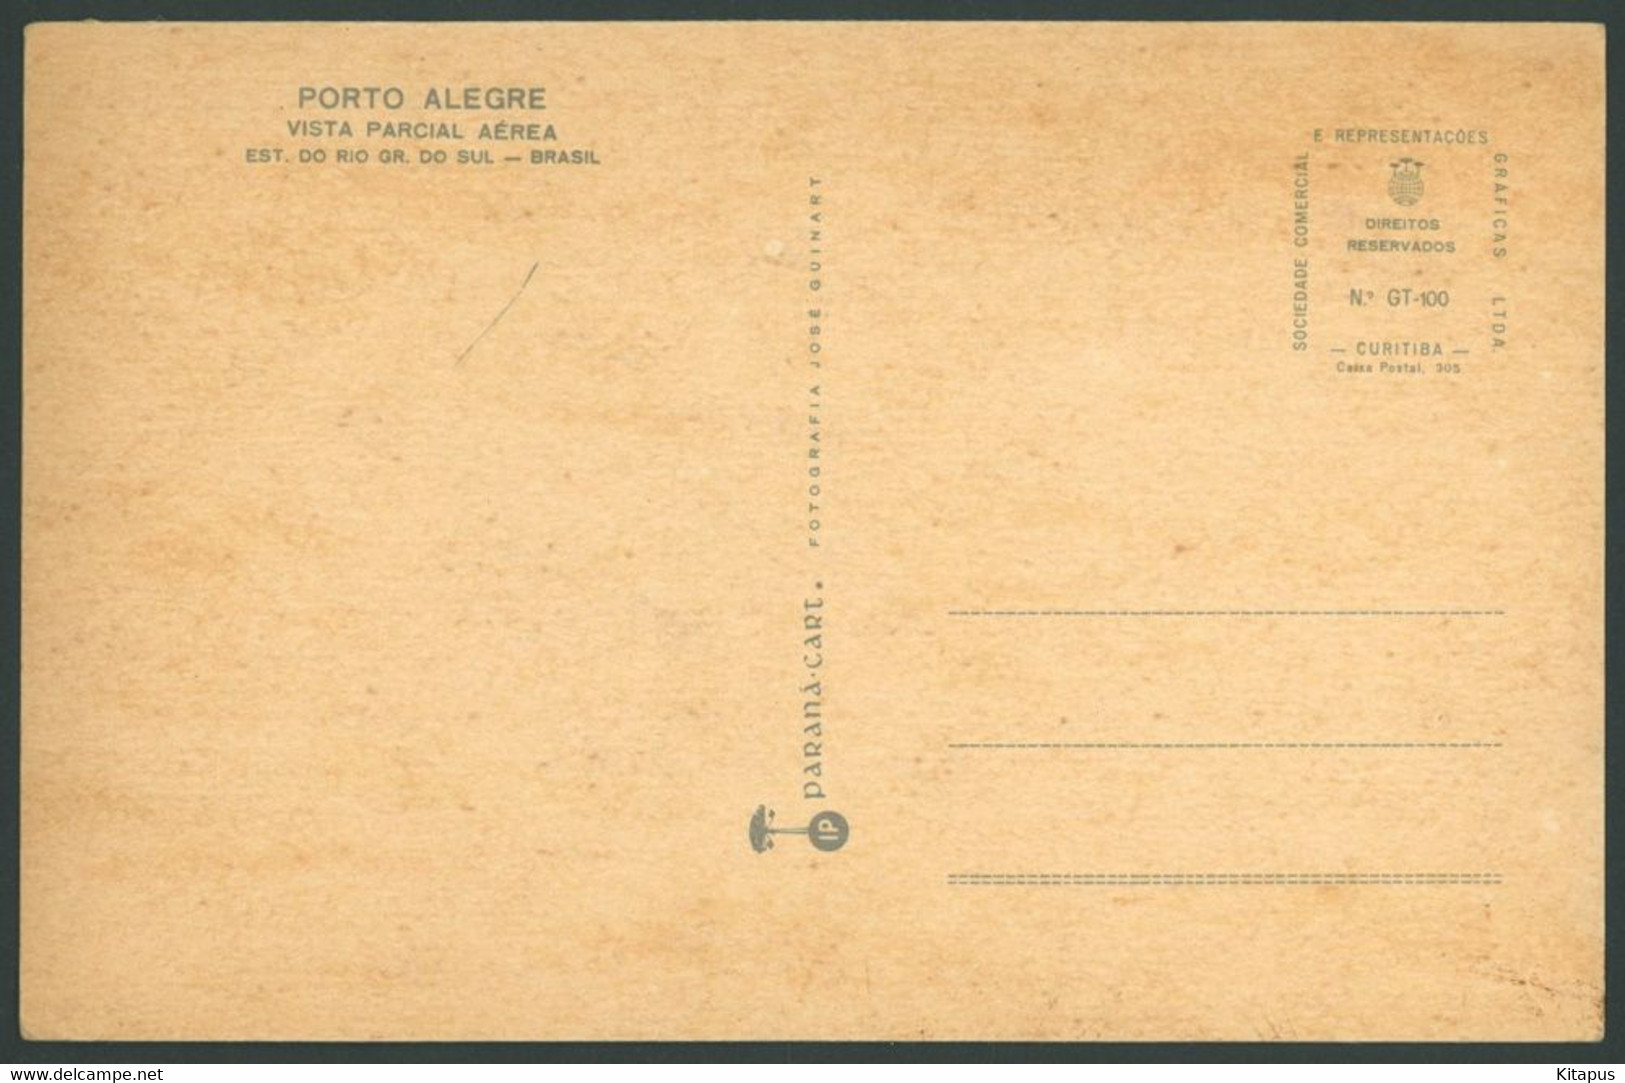 PORTO ALEGRE Vintage Postcard Brazil - Porto Alegre